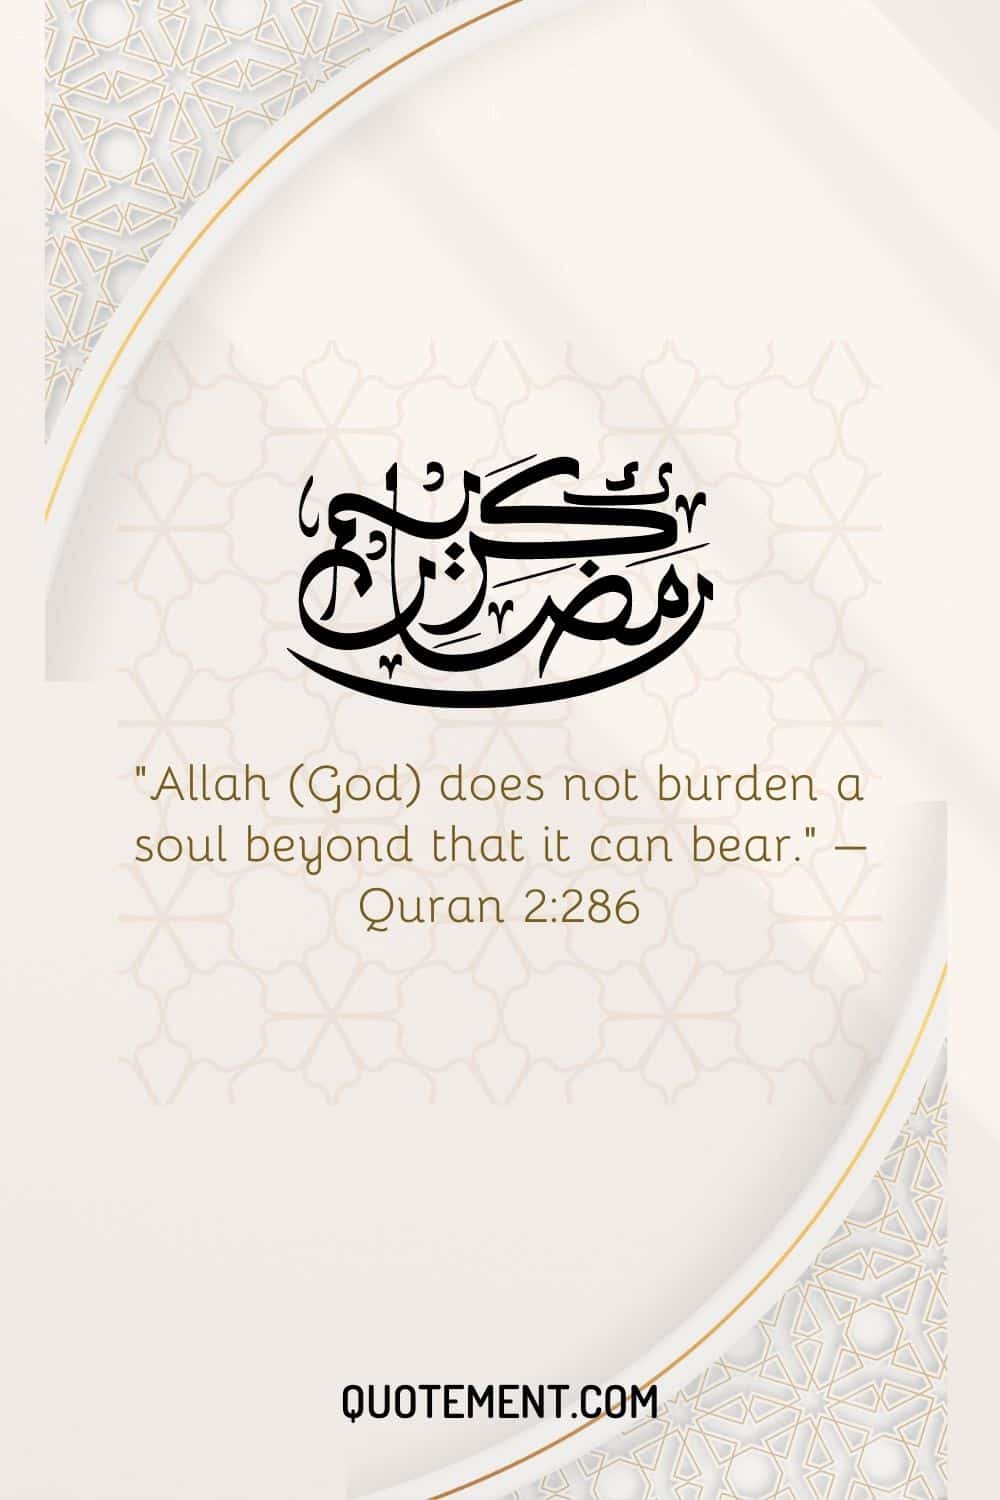 Allah (God) does not burden a soul beyond that it can bear.